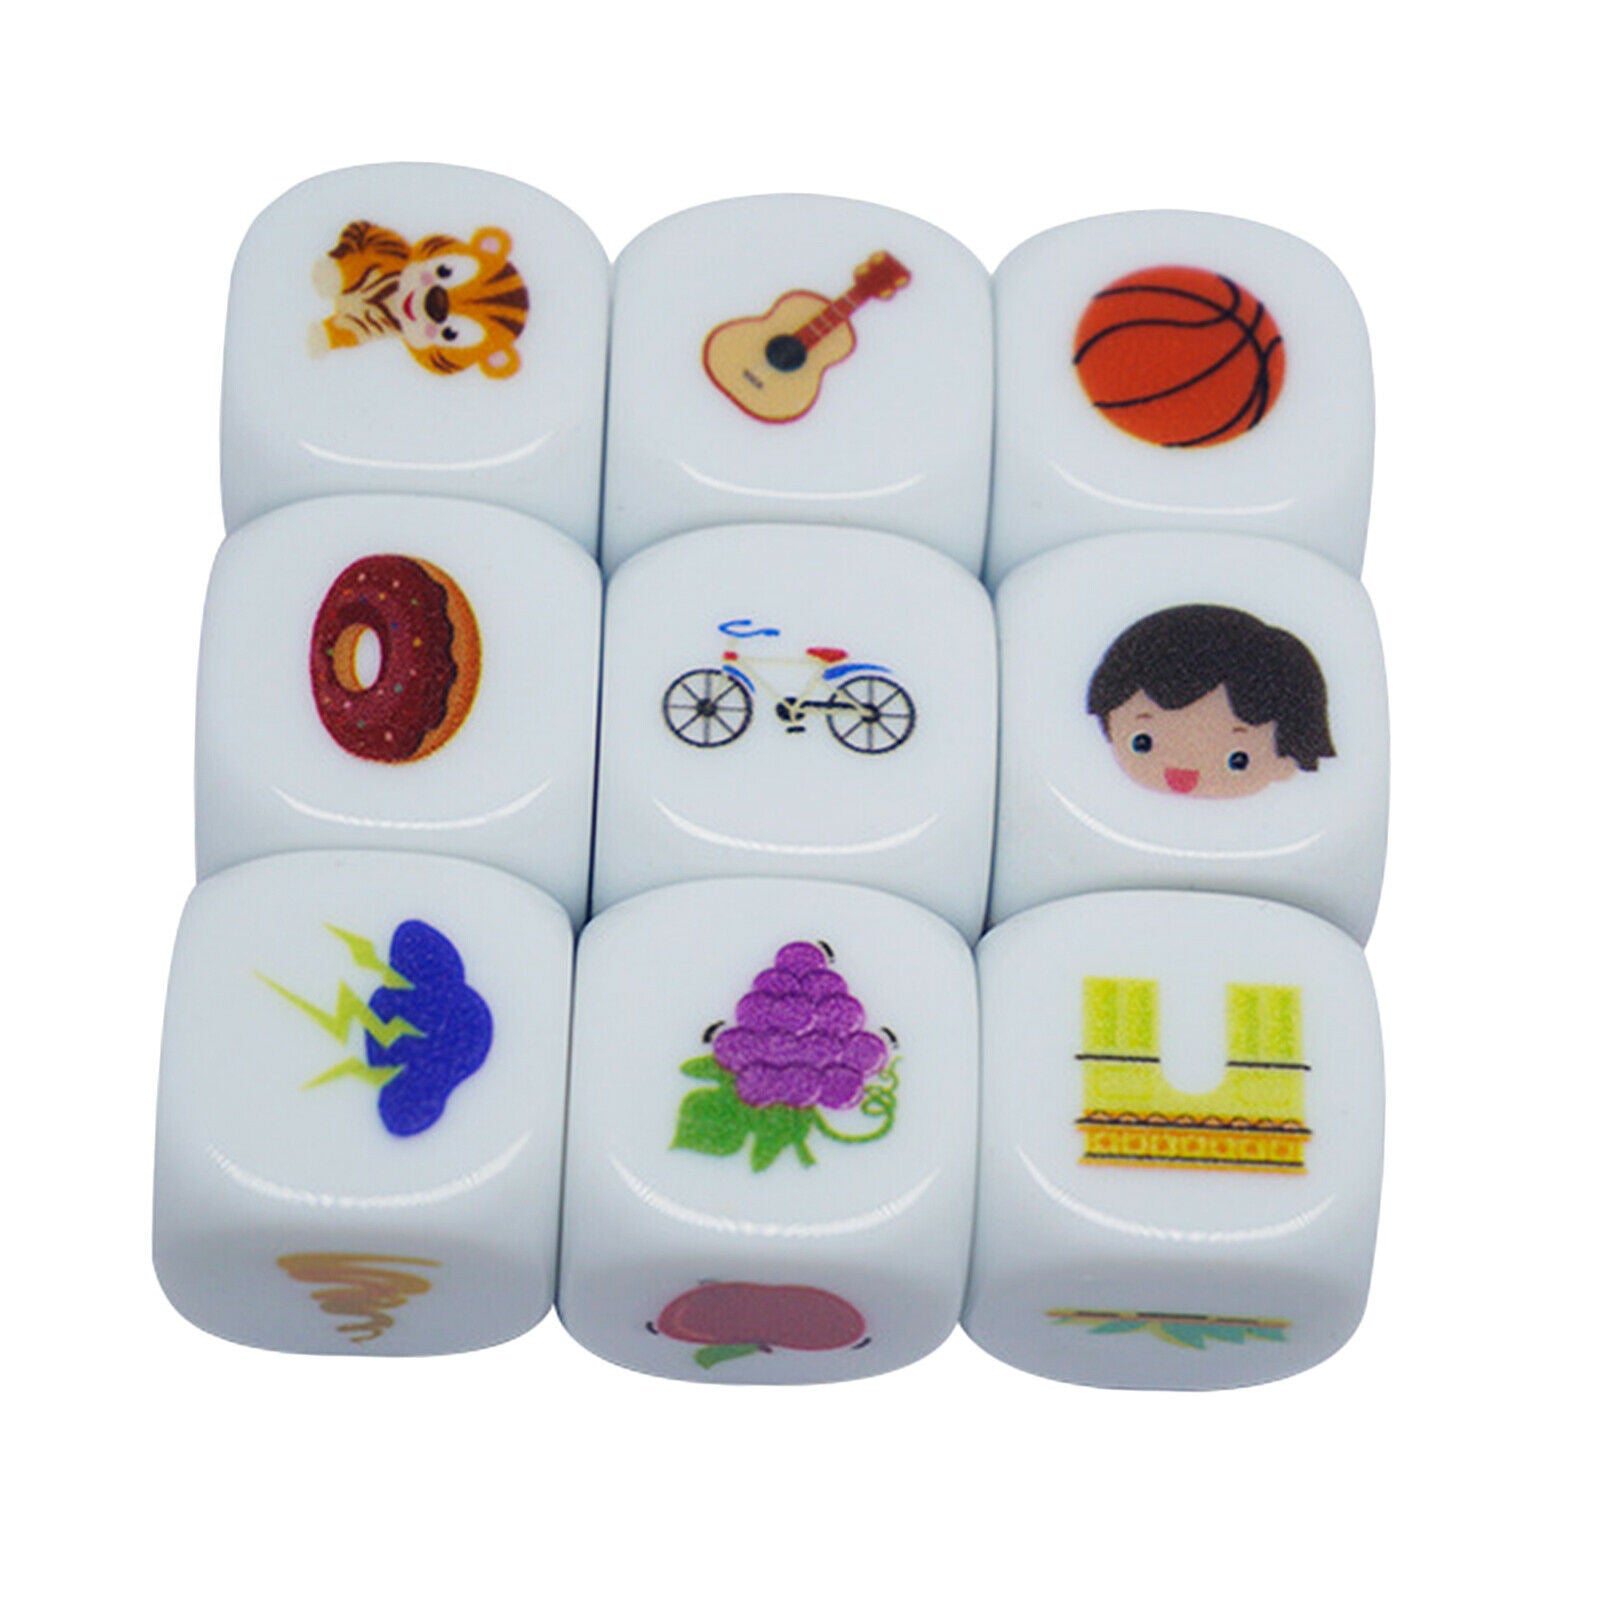 9x Acrylic Story Cubes Activity Game Educational Toys Educational Playset